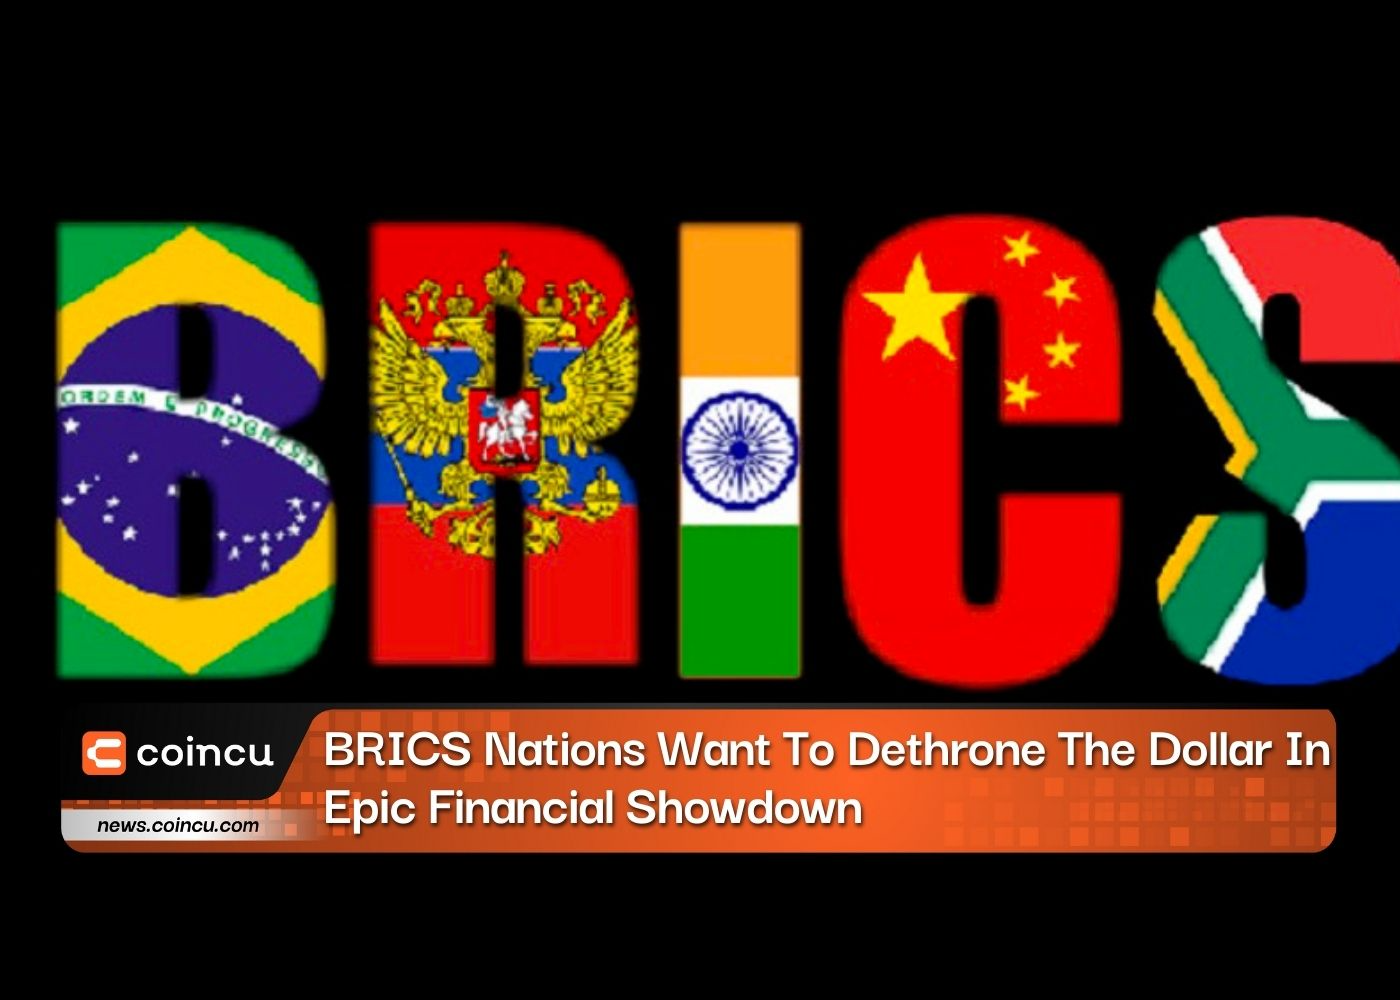 BRICS Nations Want To Dethrone The Dollar In Epic Financial Showdown